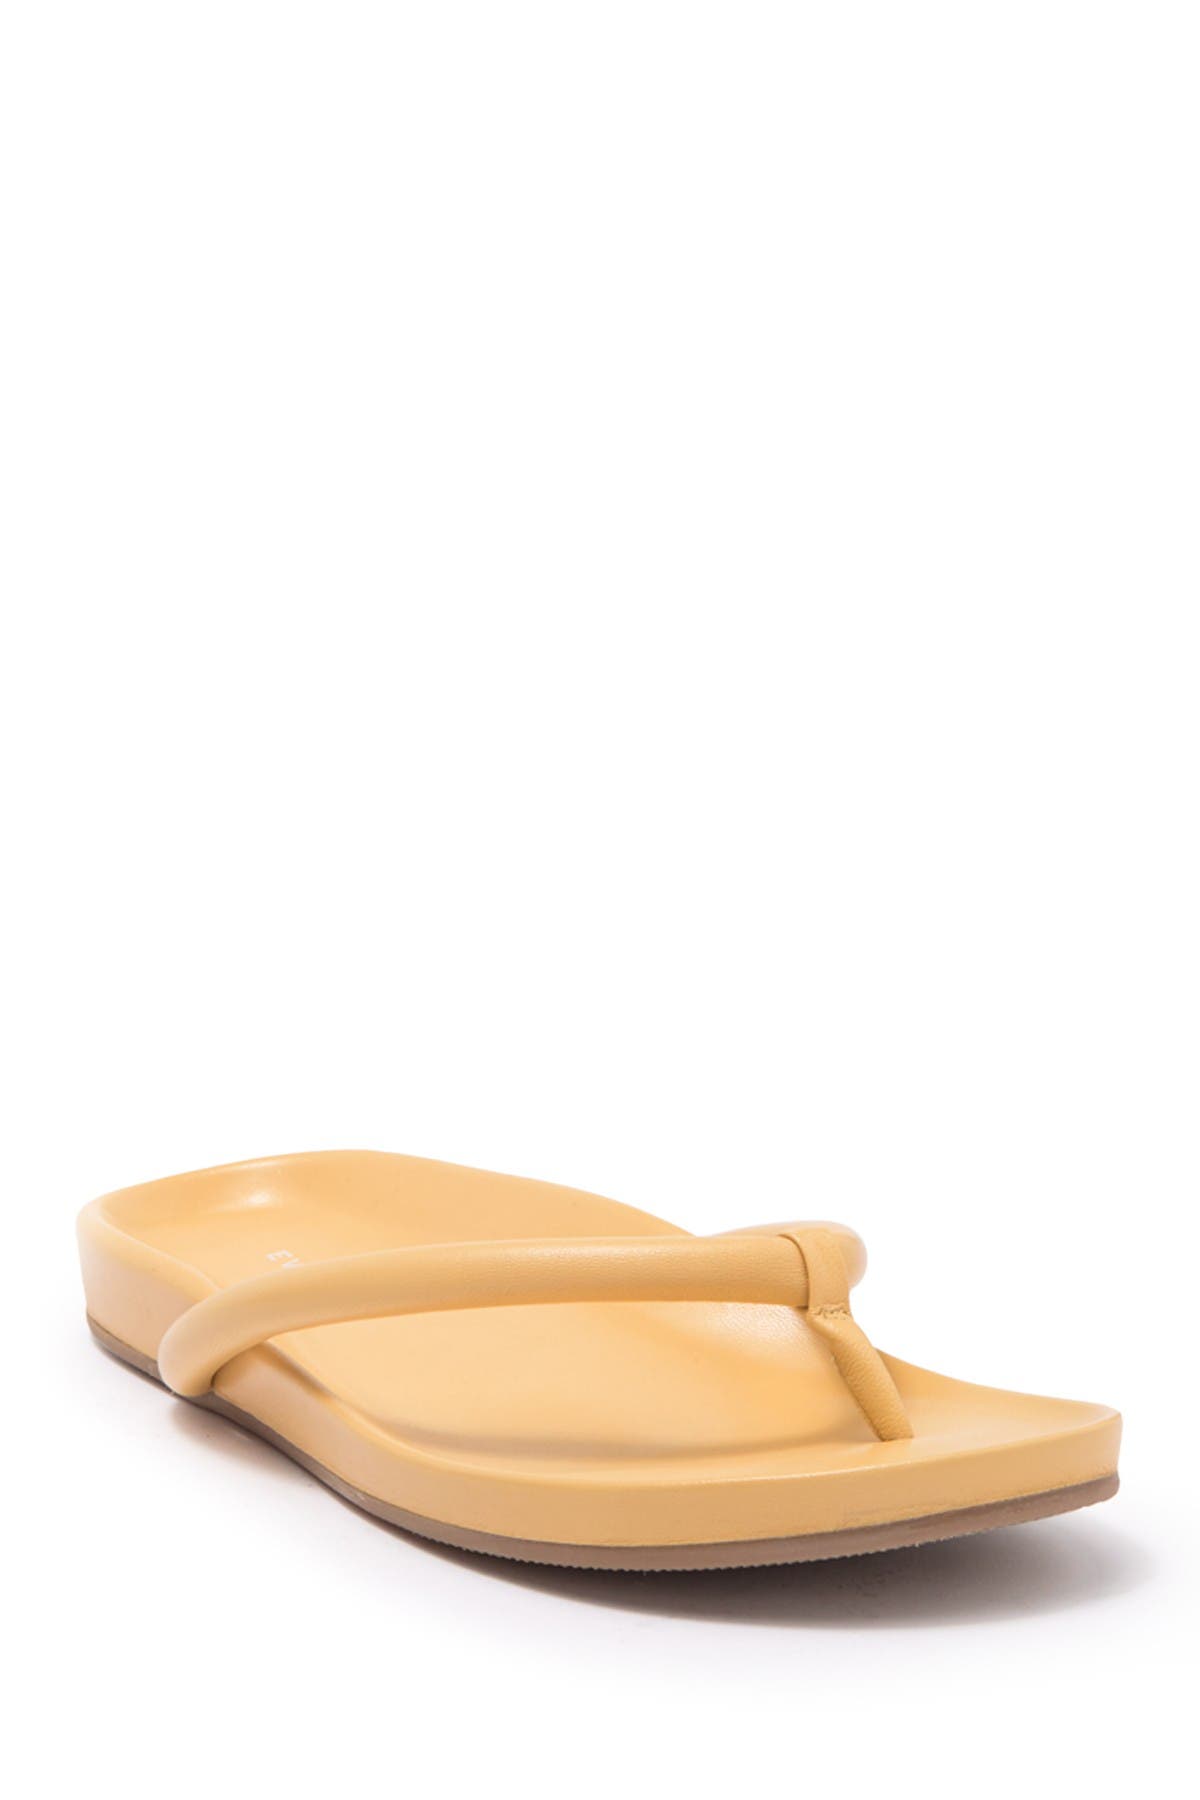 EVERLANE | The Form Thong Sandal 